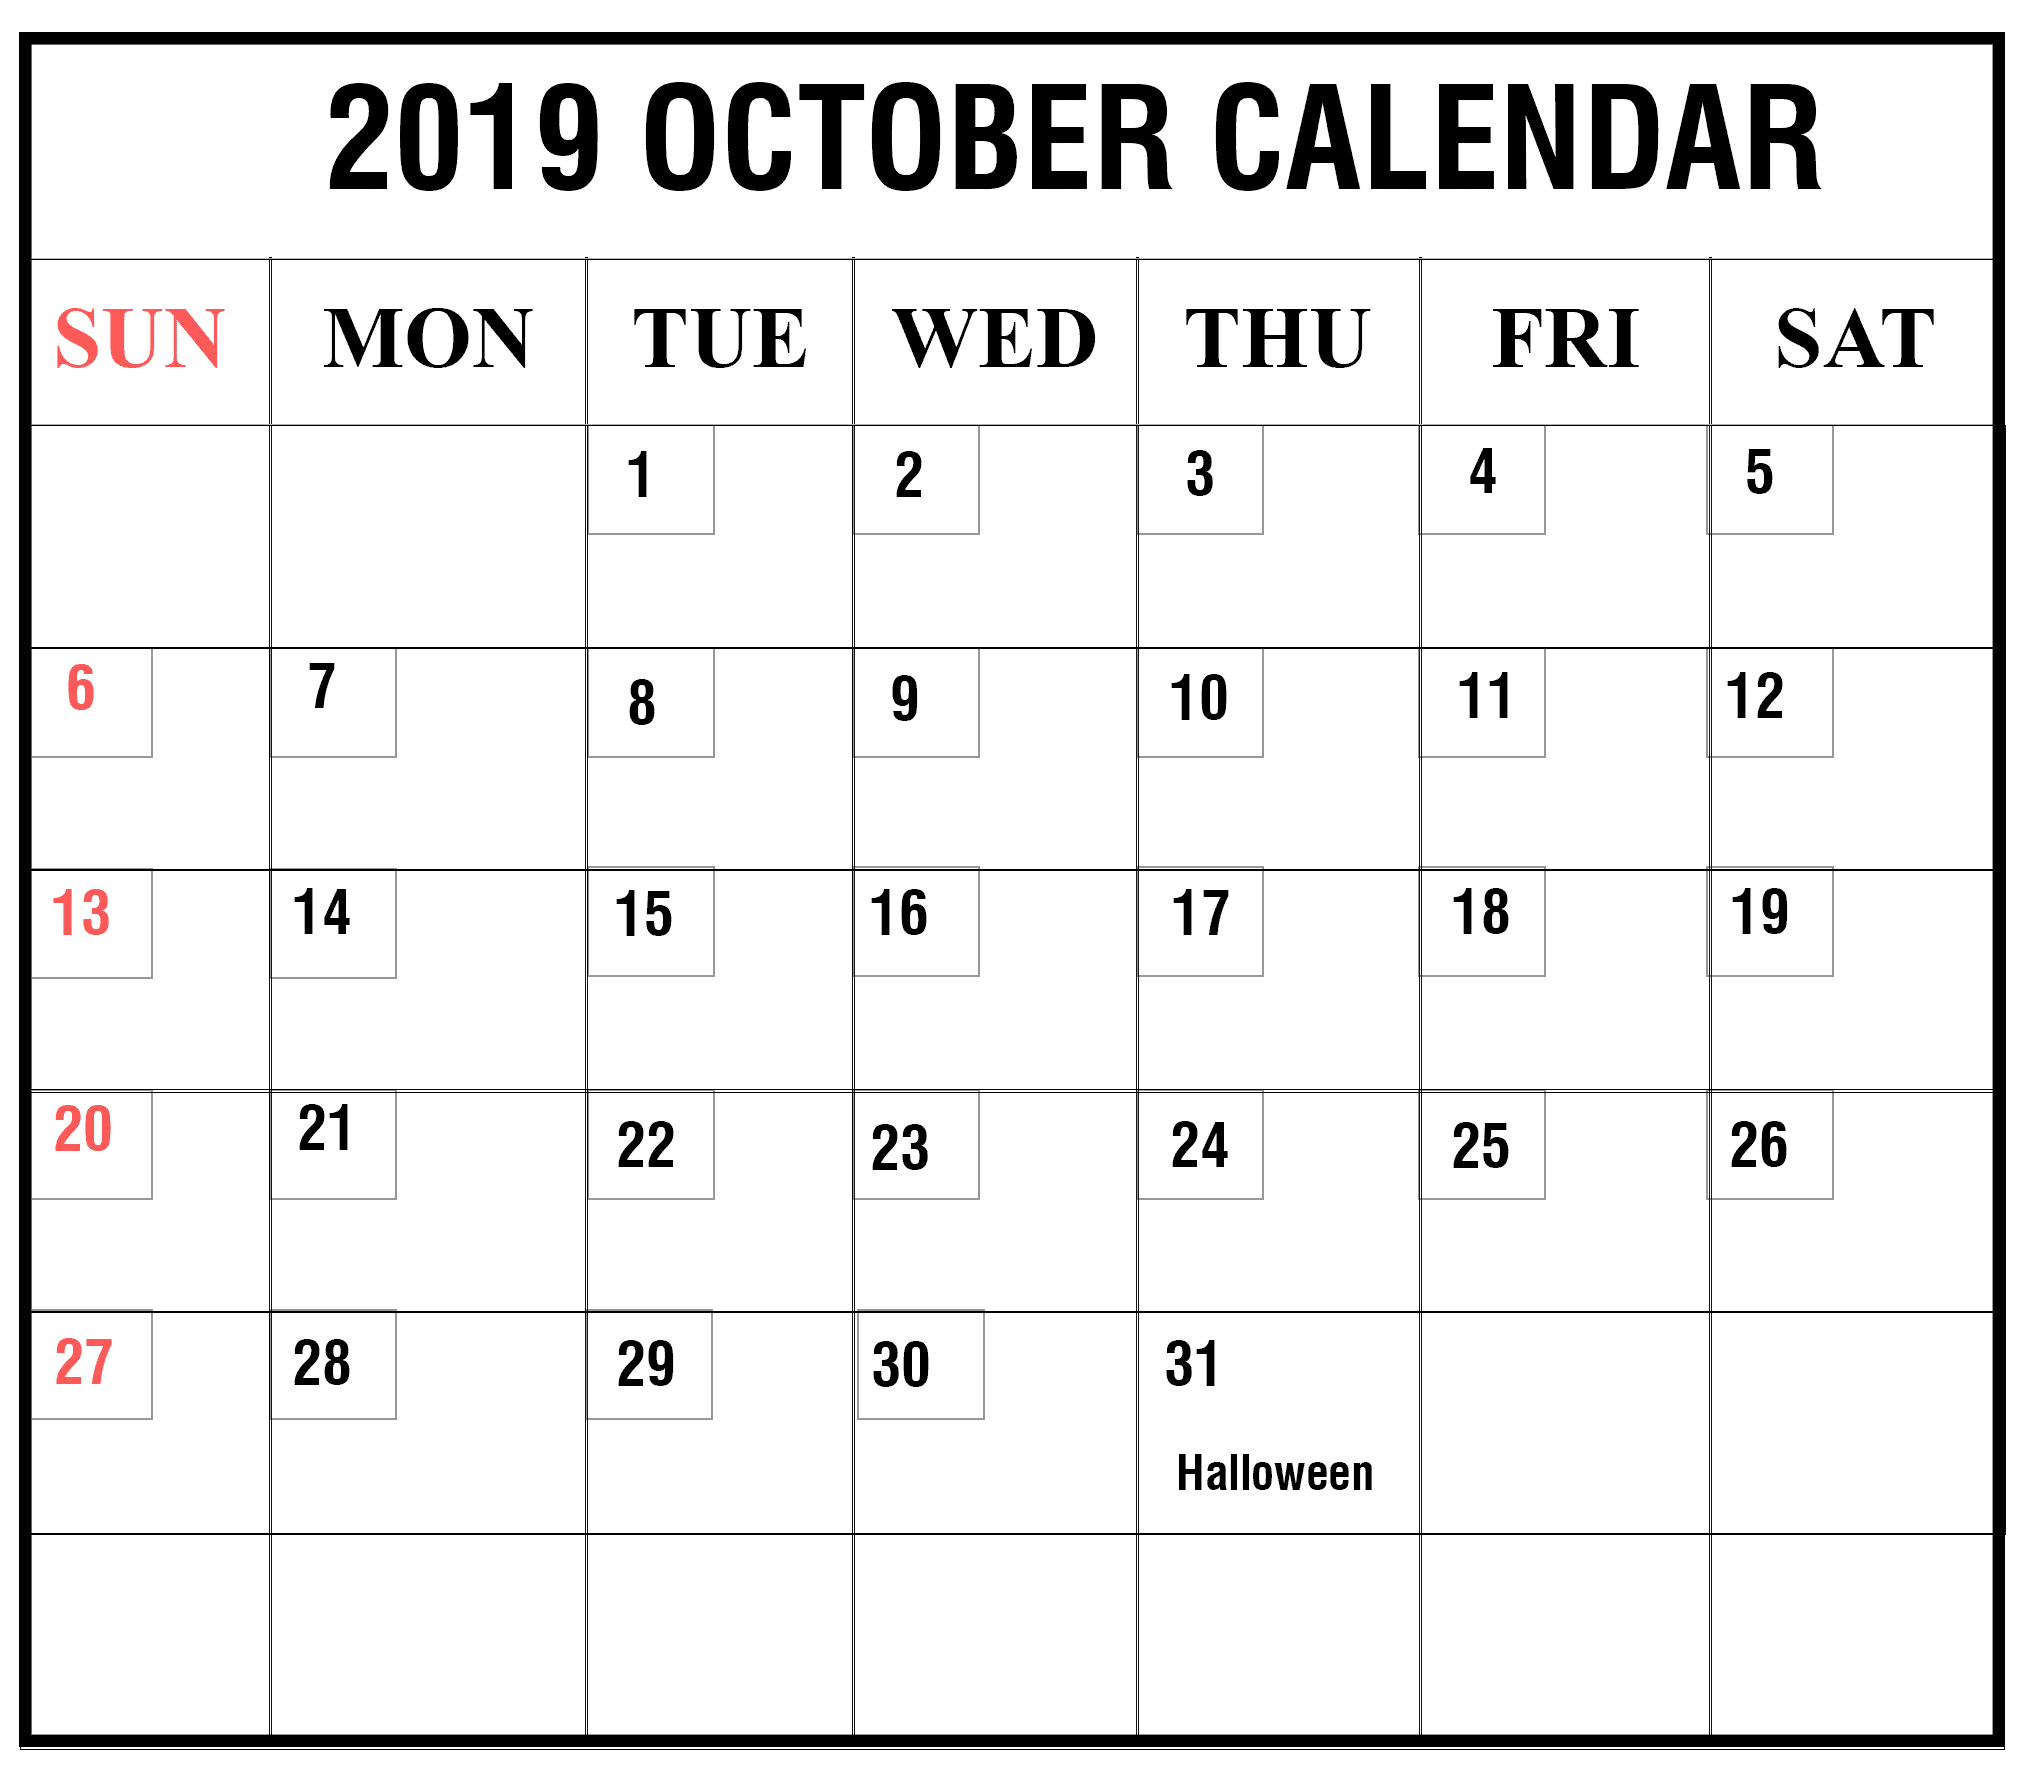 October Calendar 2019 Editable